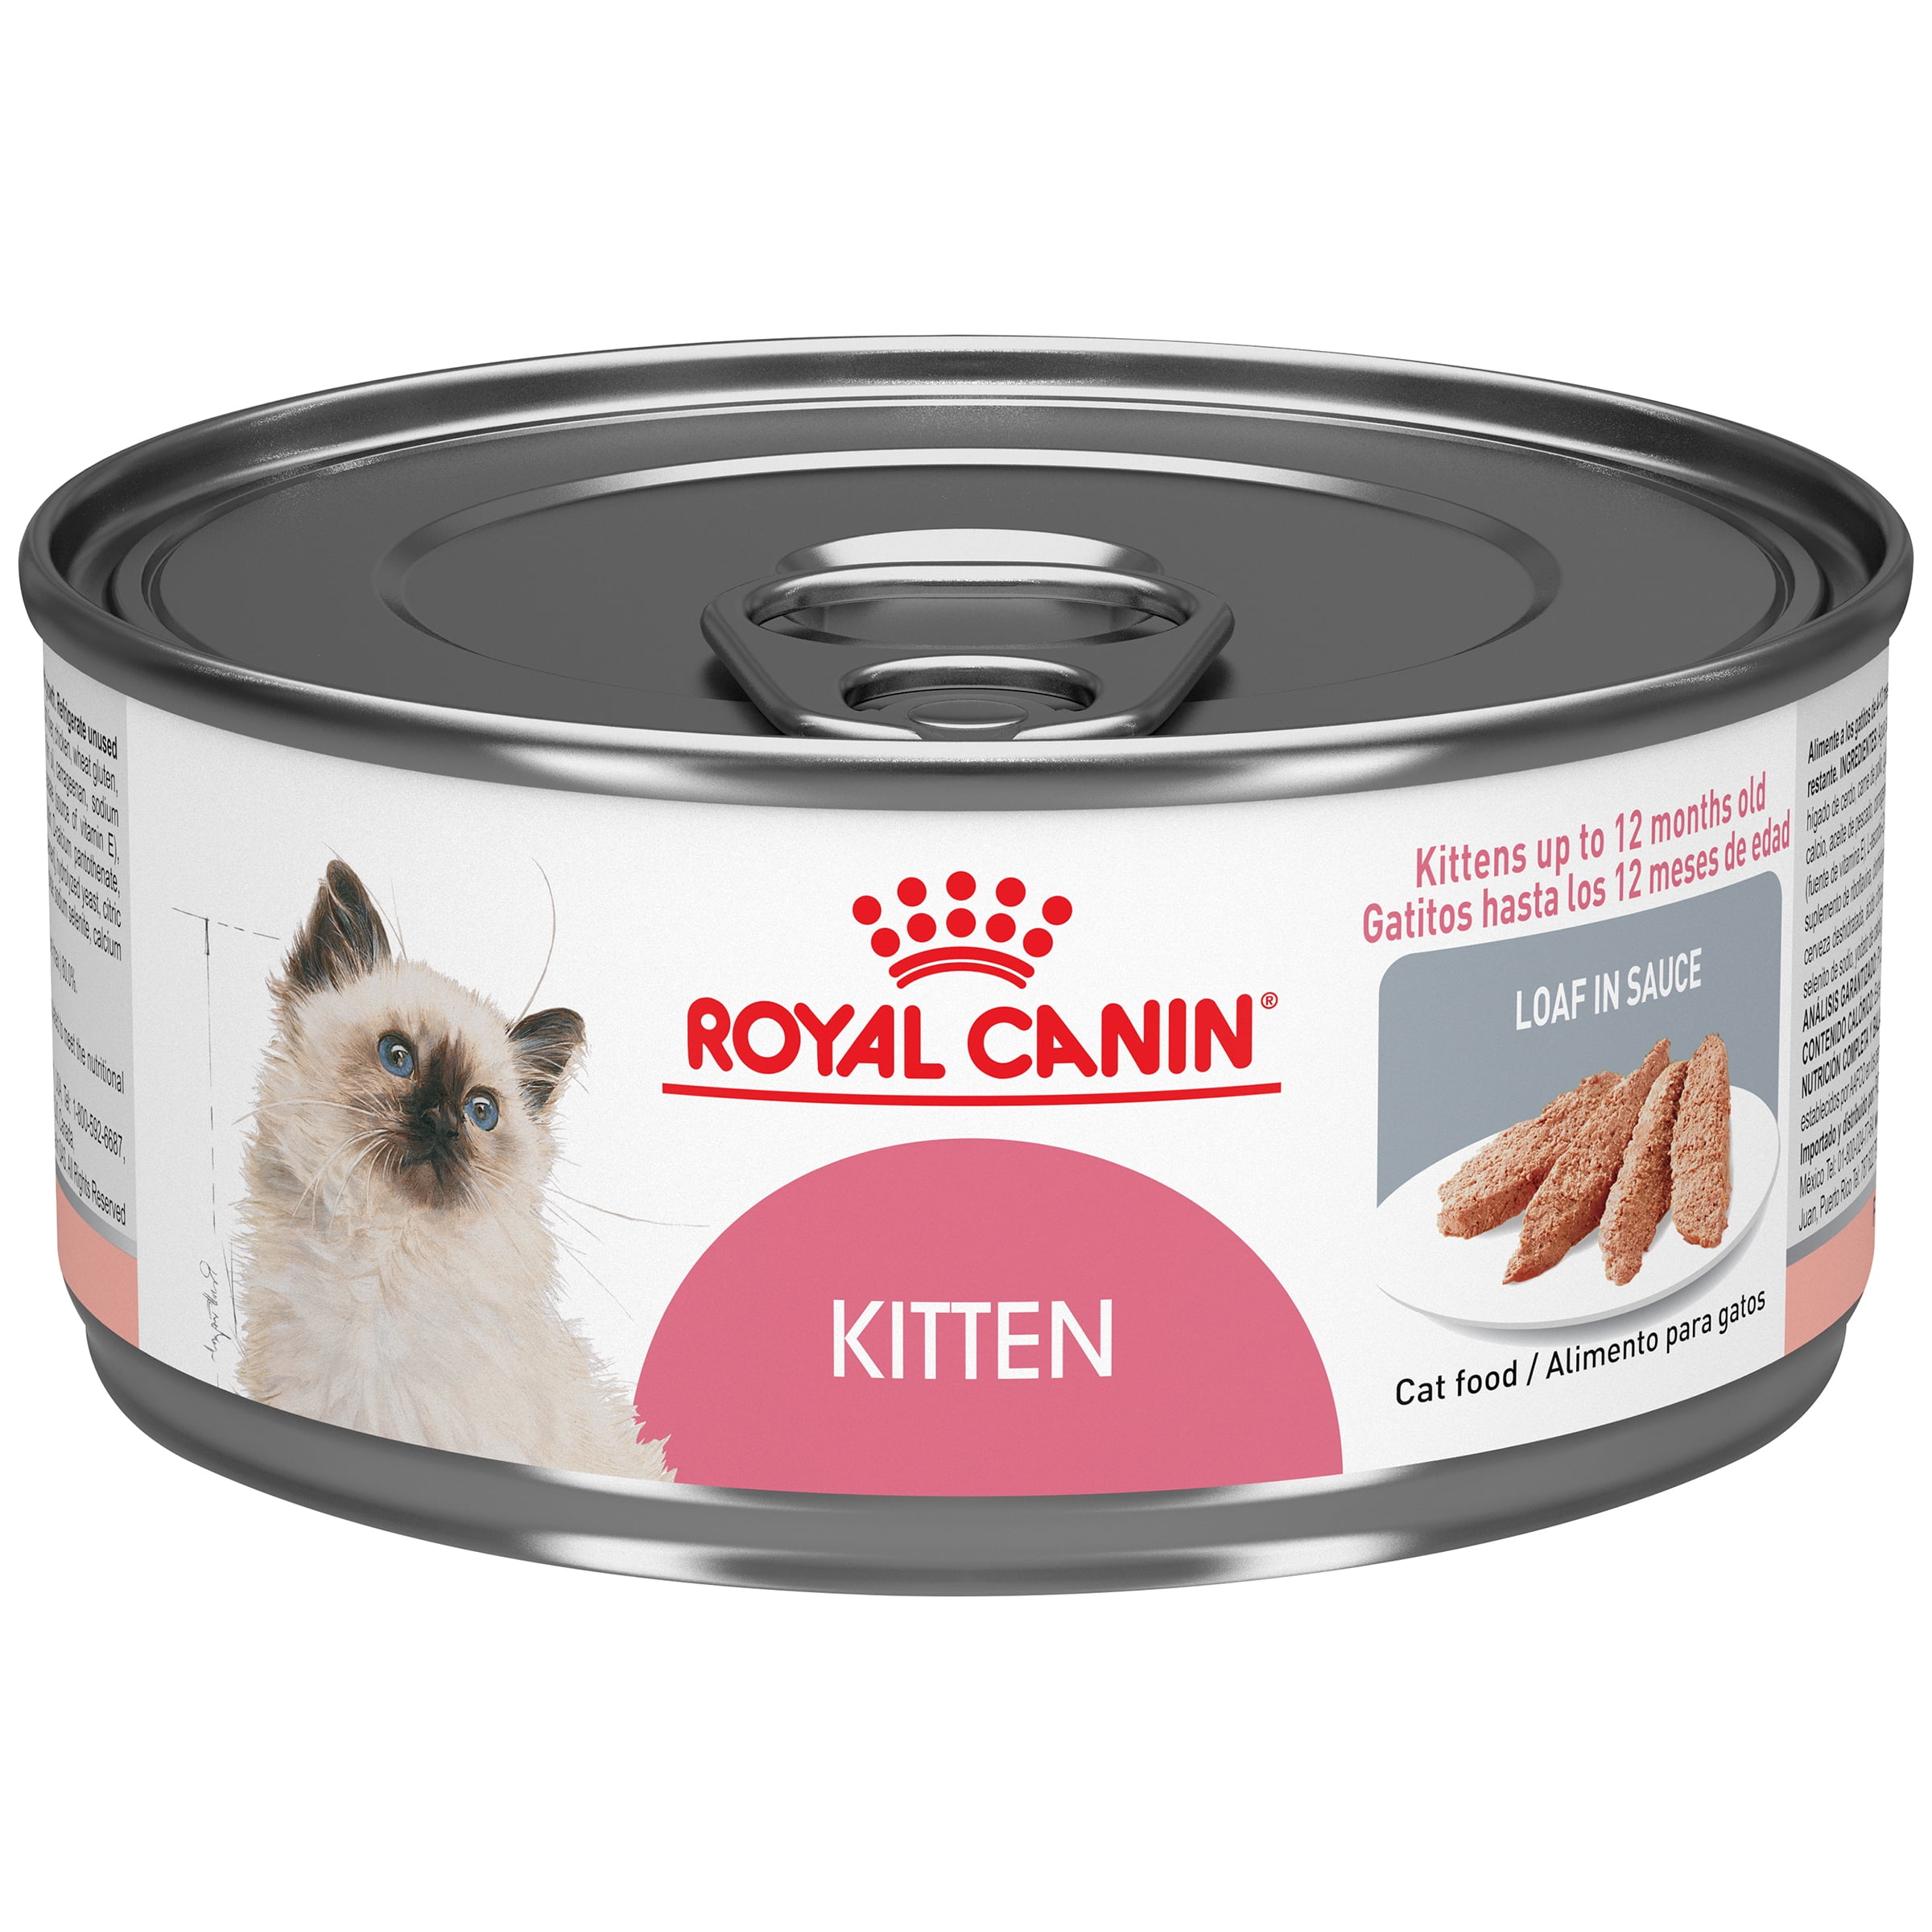 Royal Canin Bengal Cat Food Reviews